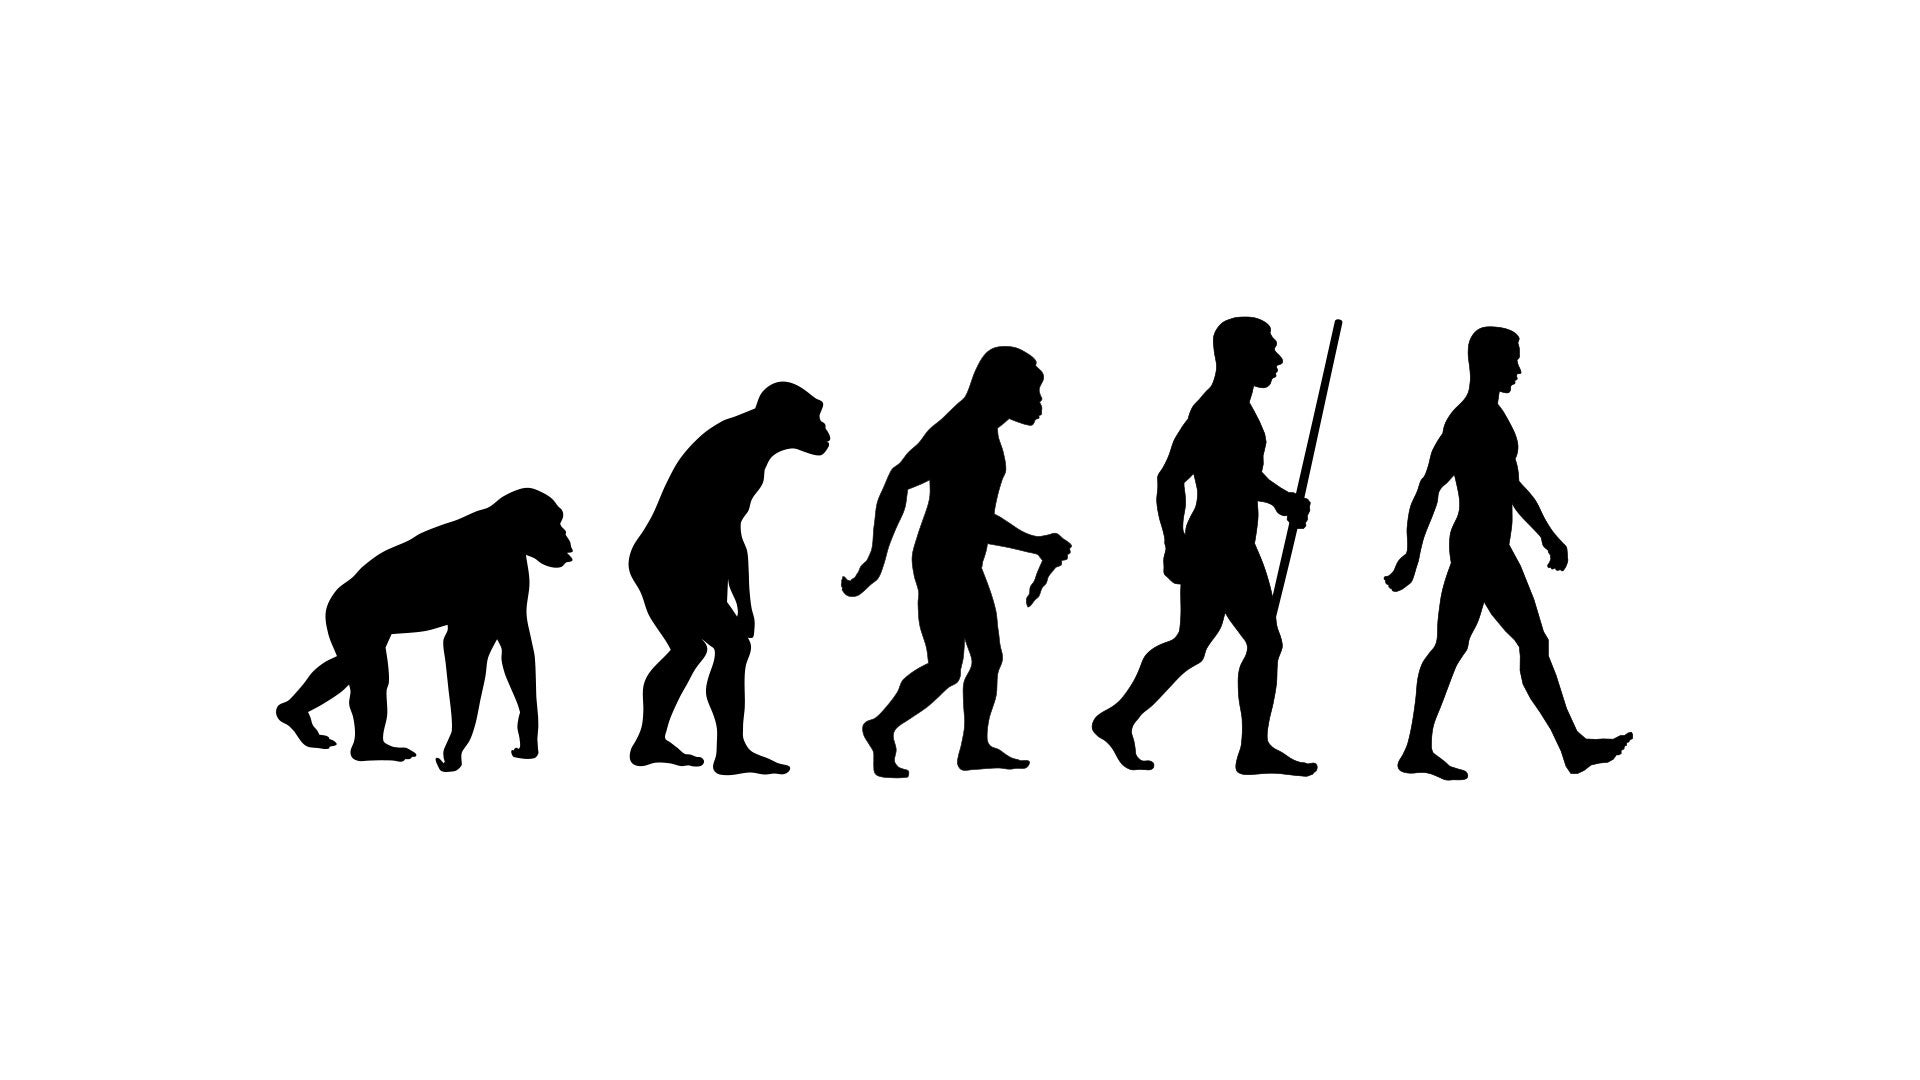 David Berlinski on the link between evolution, science and